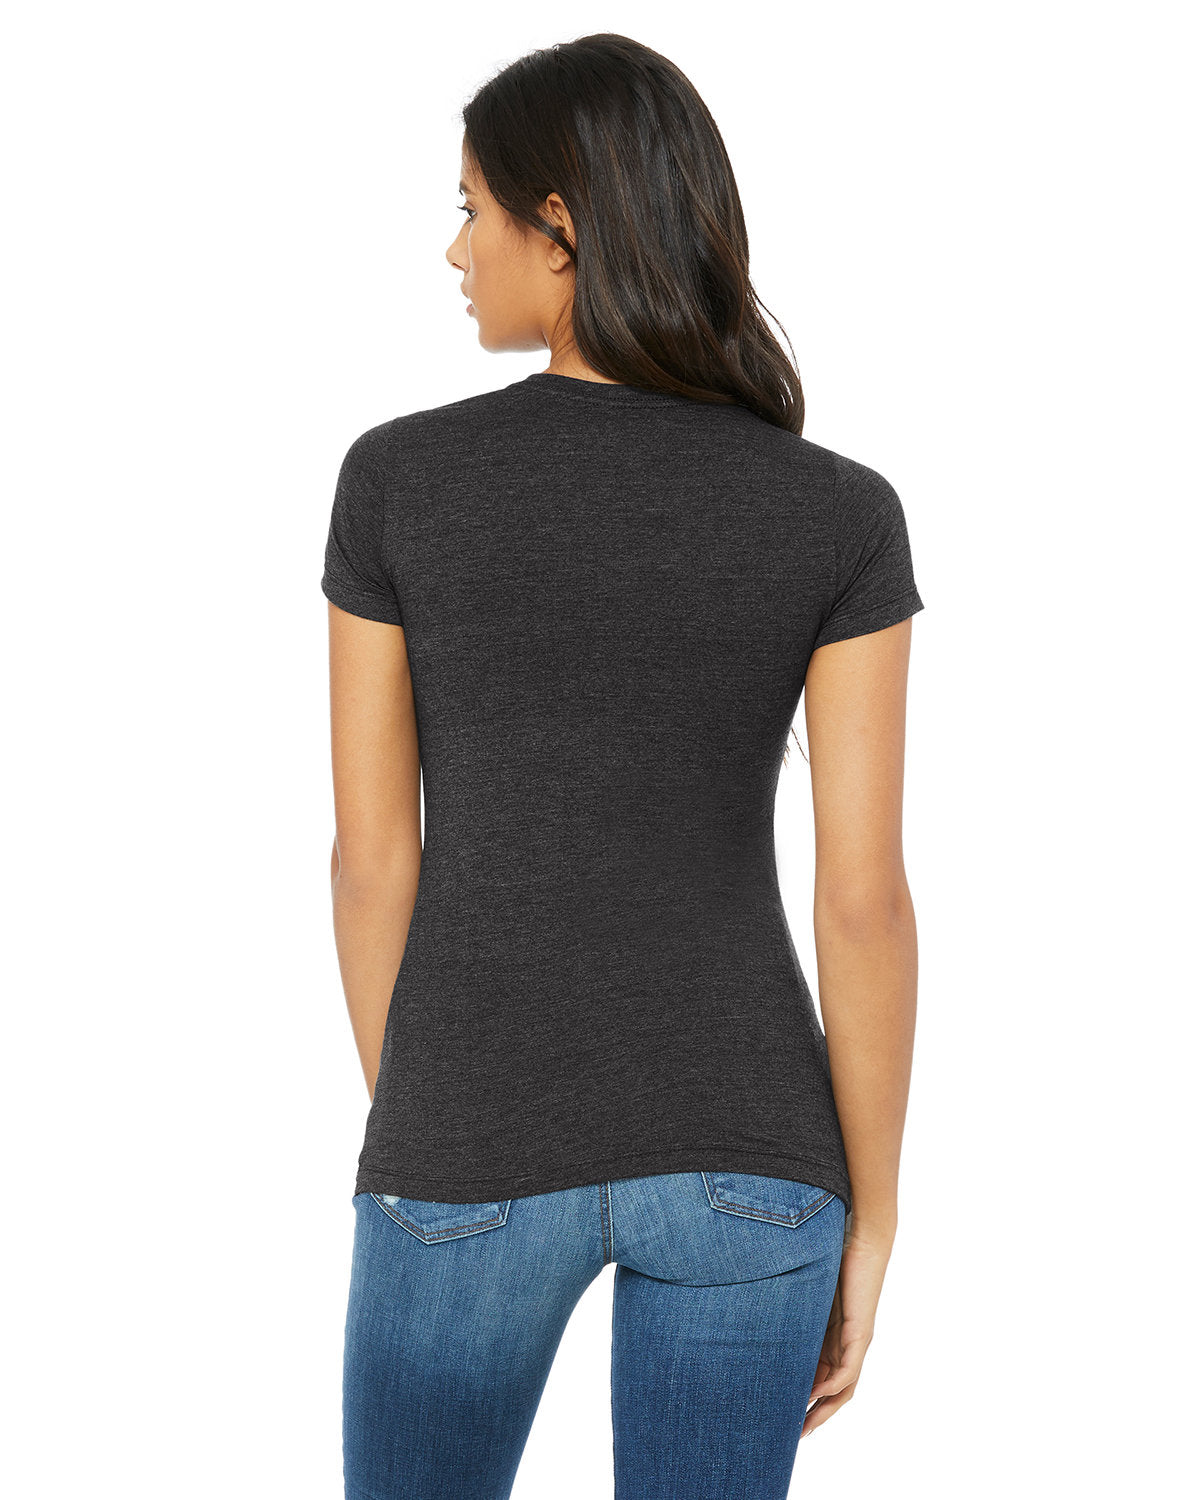 Bella + Canvas 6004 Ladies' The Favorite T-Shirt - Solid Black Blend - S